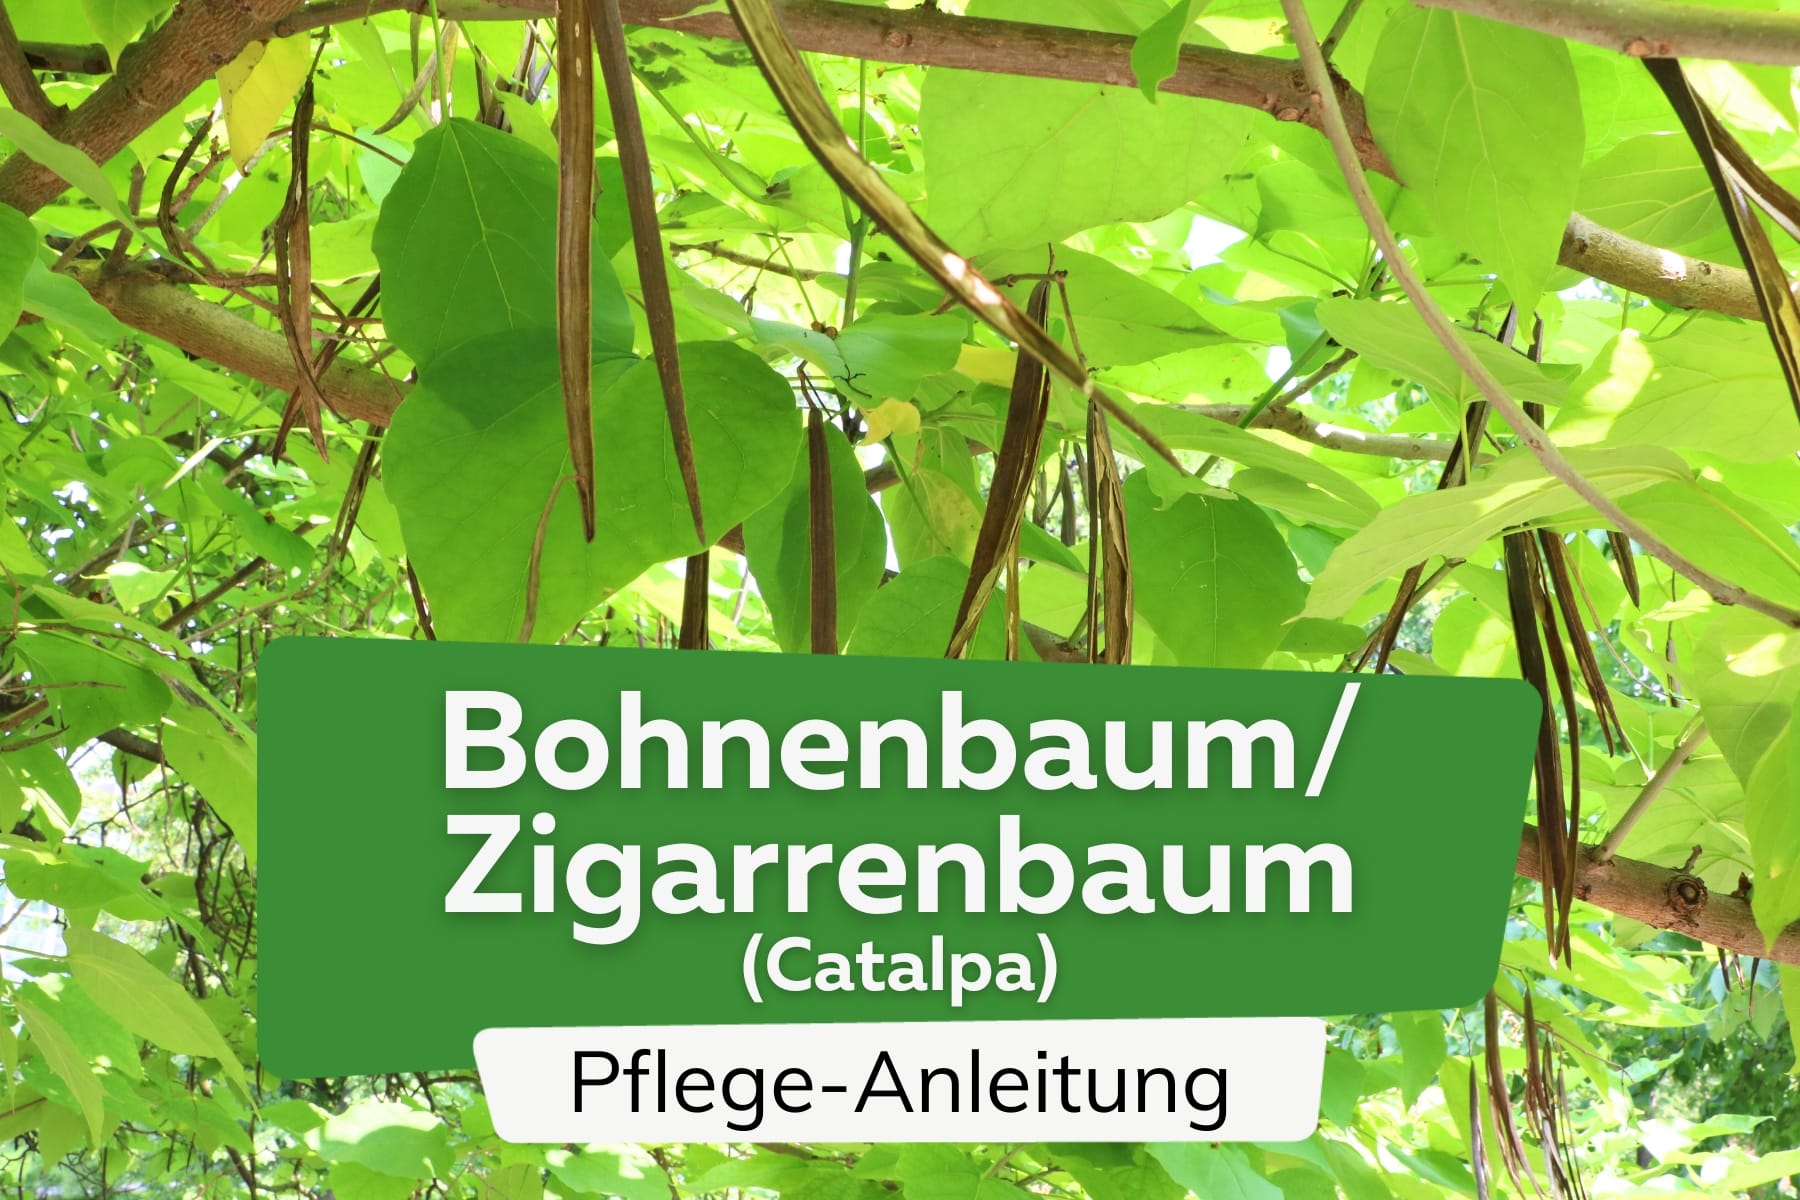 Bohnenbaum/Zigarrenbaum (Catalpa)